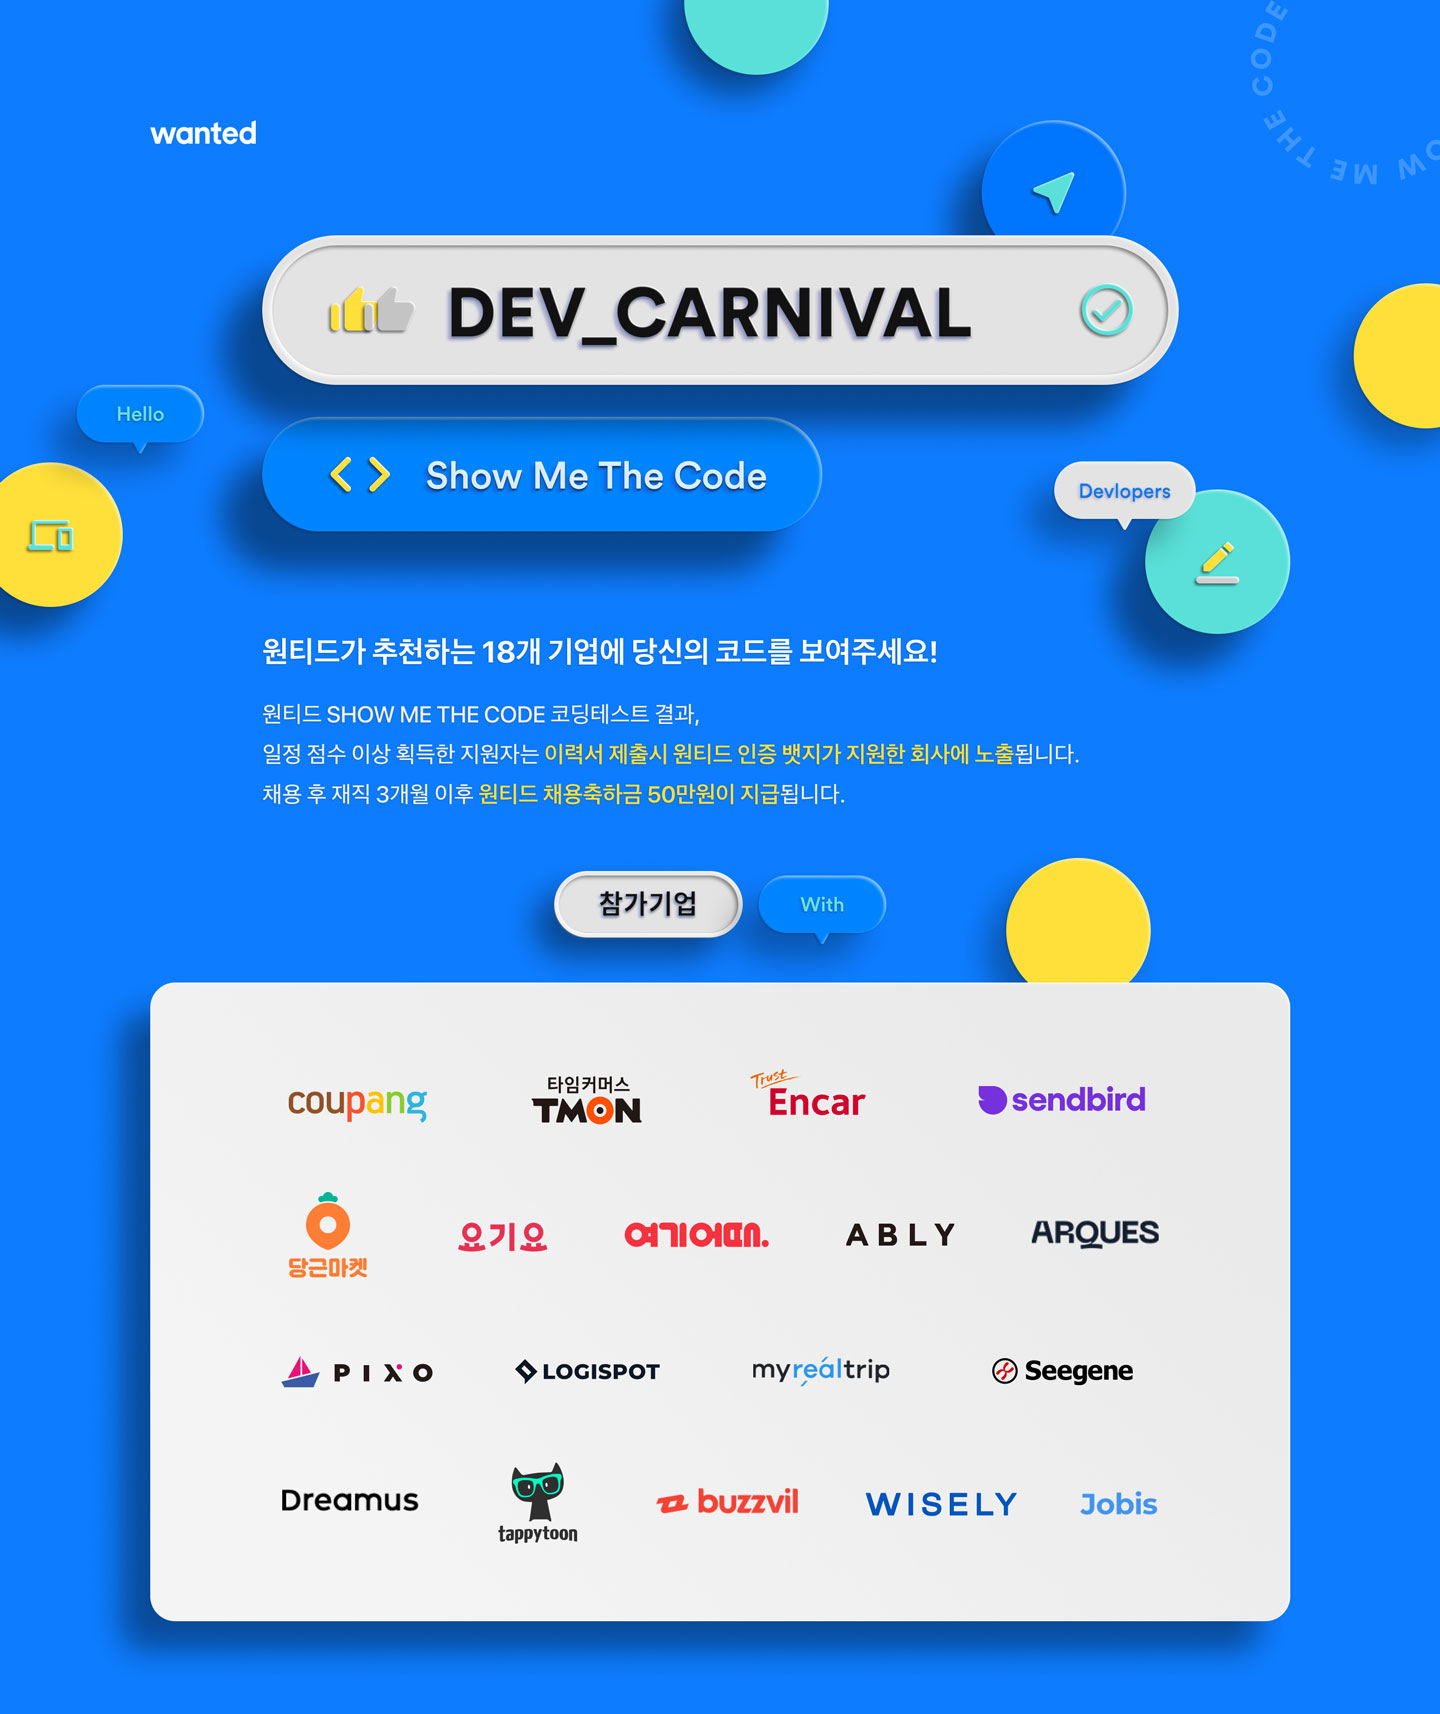 2021 Dev Carnival :Show Me The Code